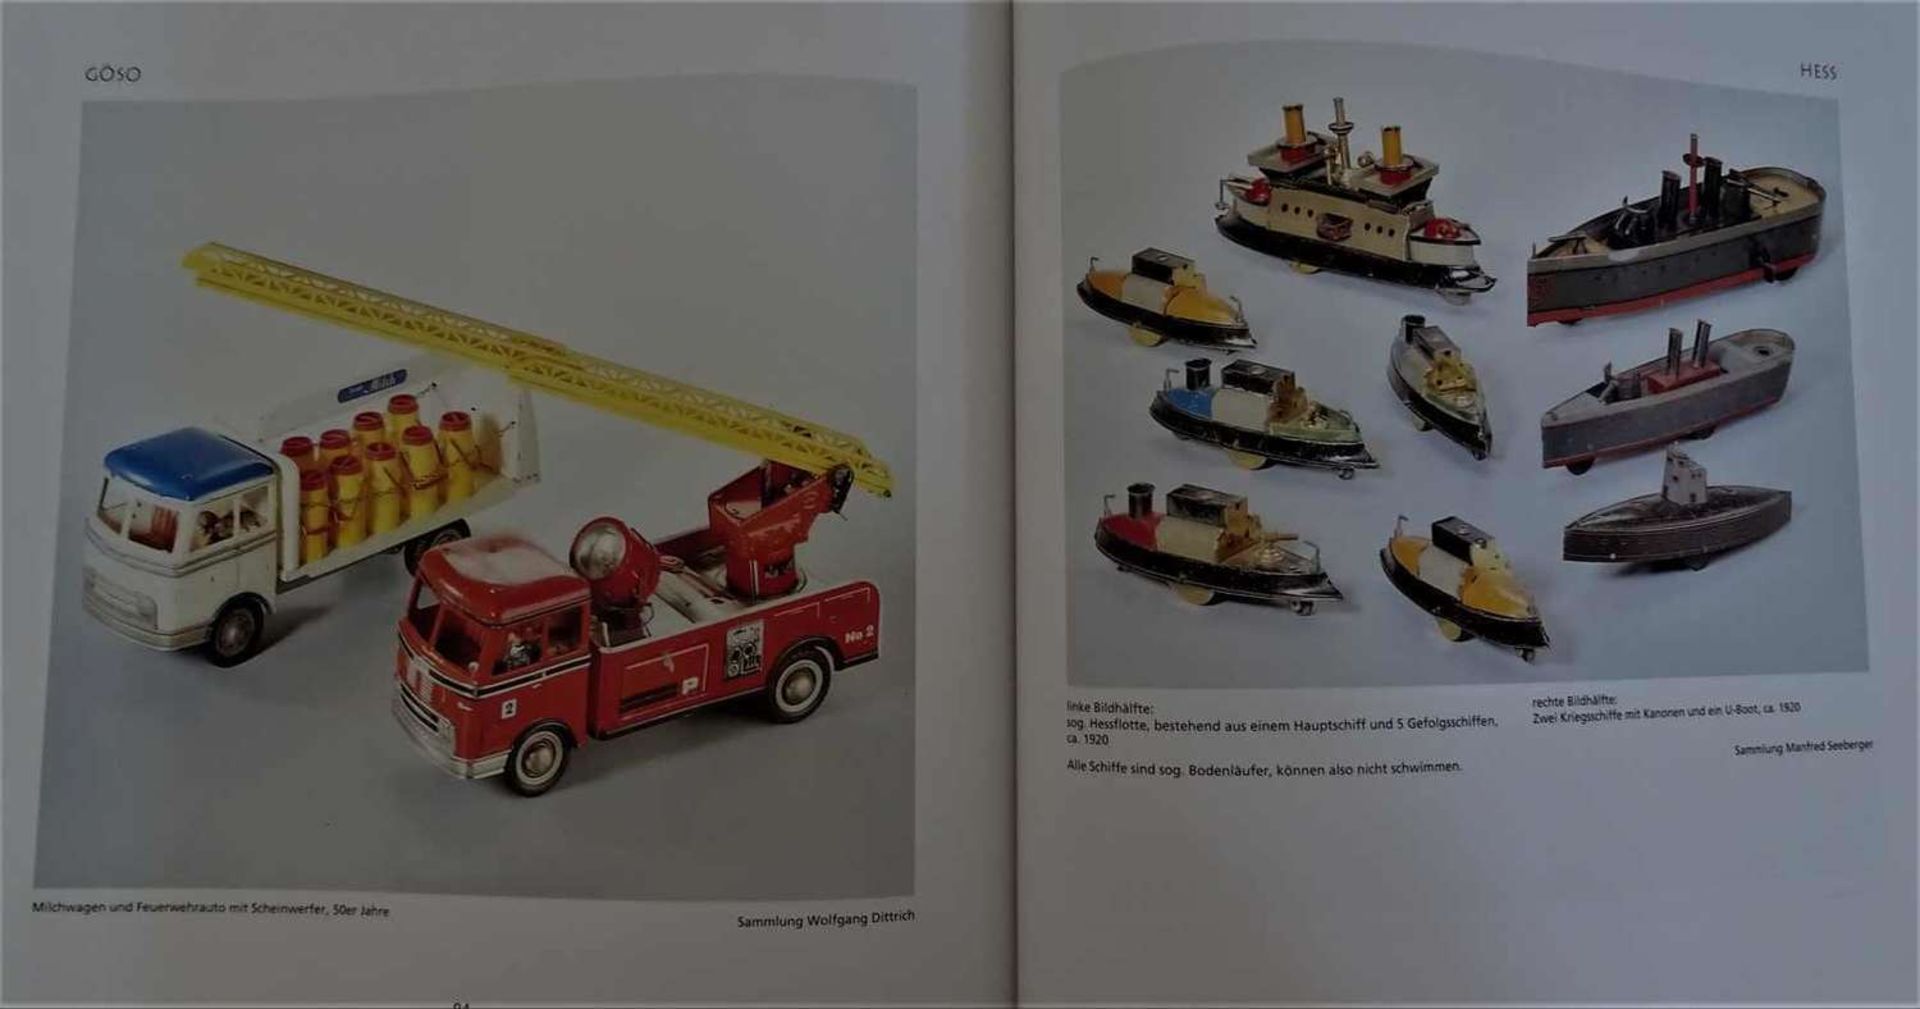 SCHUCO, Bing & Co. "Berühmtes Blechspielzeug aus Nürnberg", W. Tümmels, Nürnberg, ISBN 3-921590-15- - Bild 4 aus 4